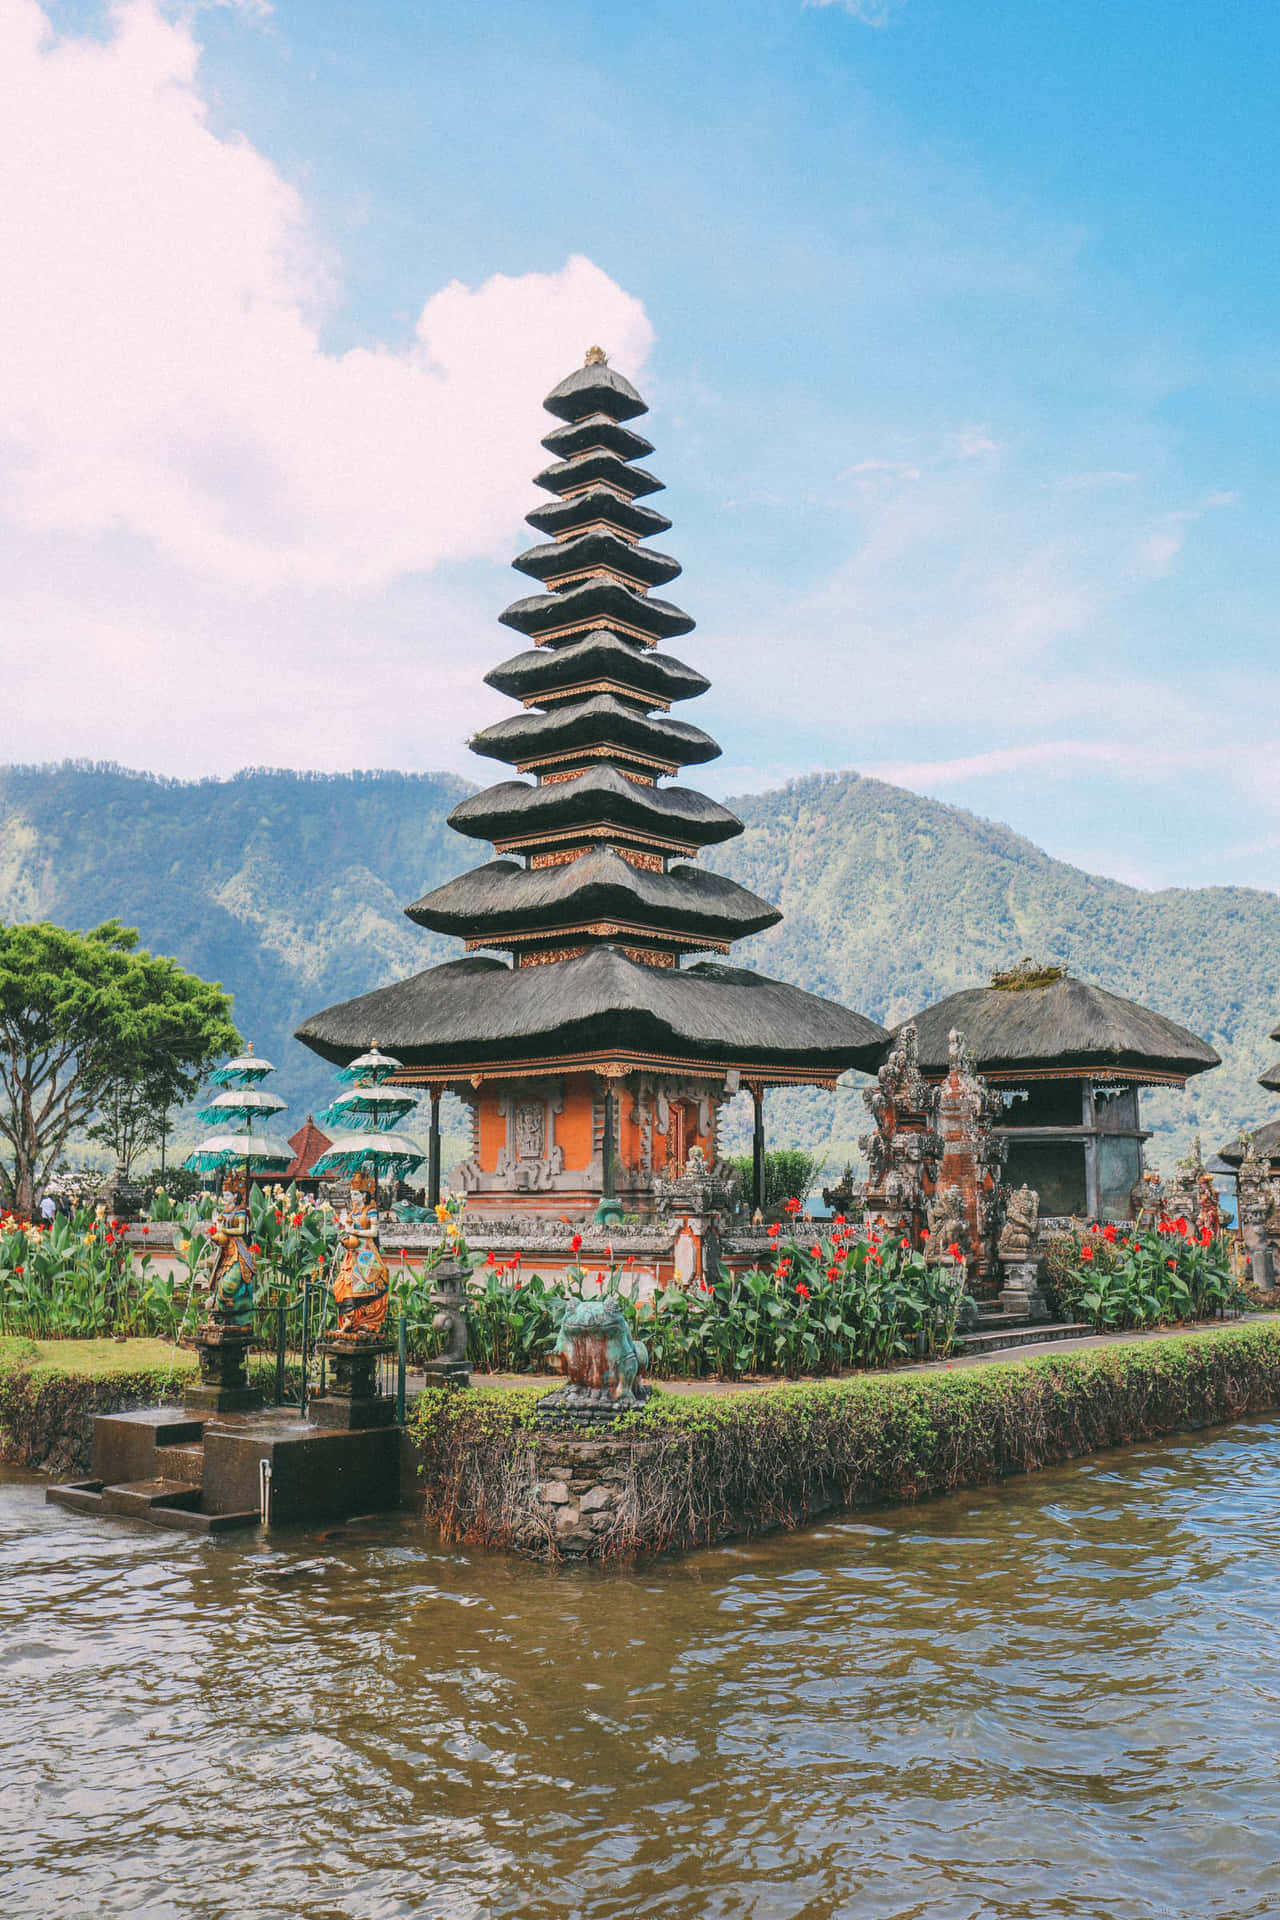 Take a break and relax in beautiful Bali!